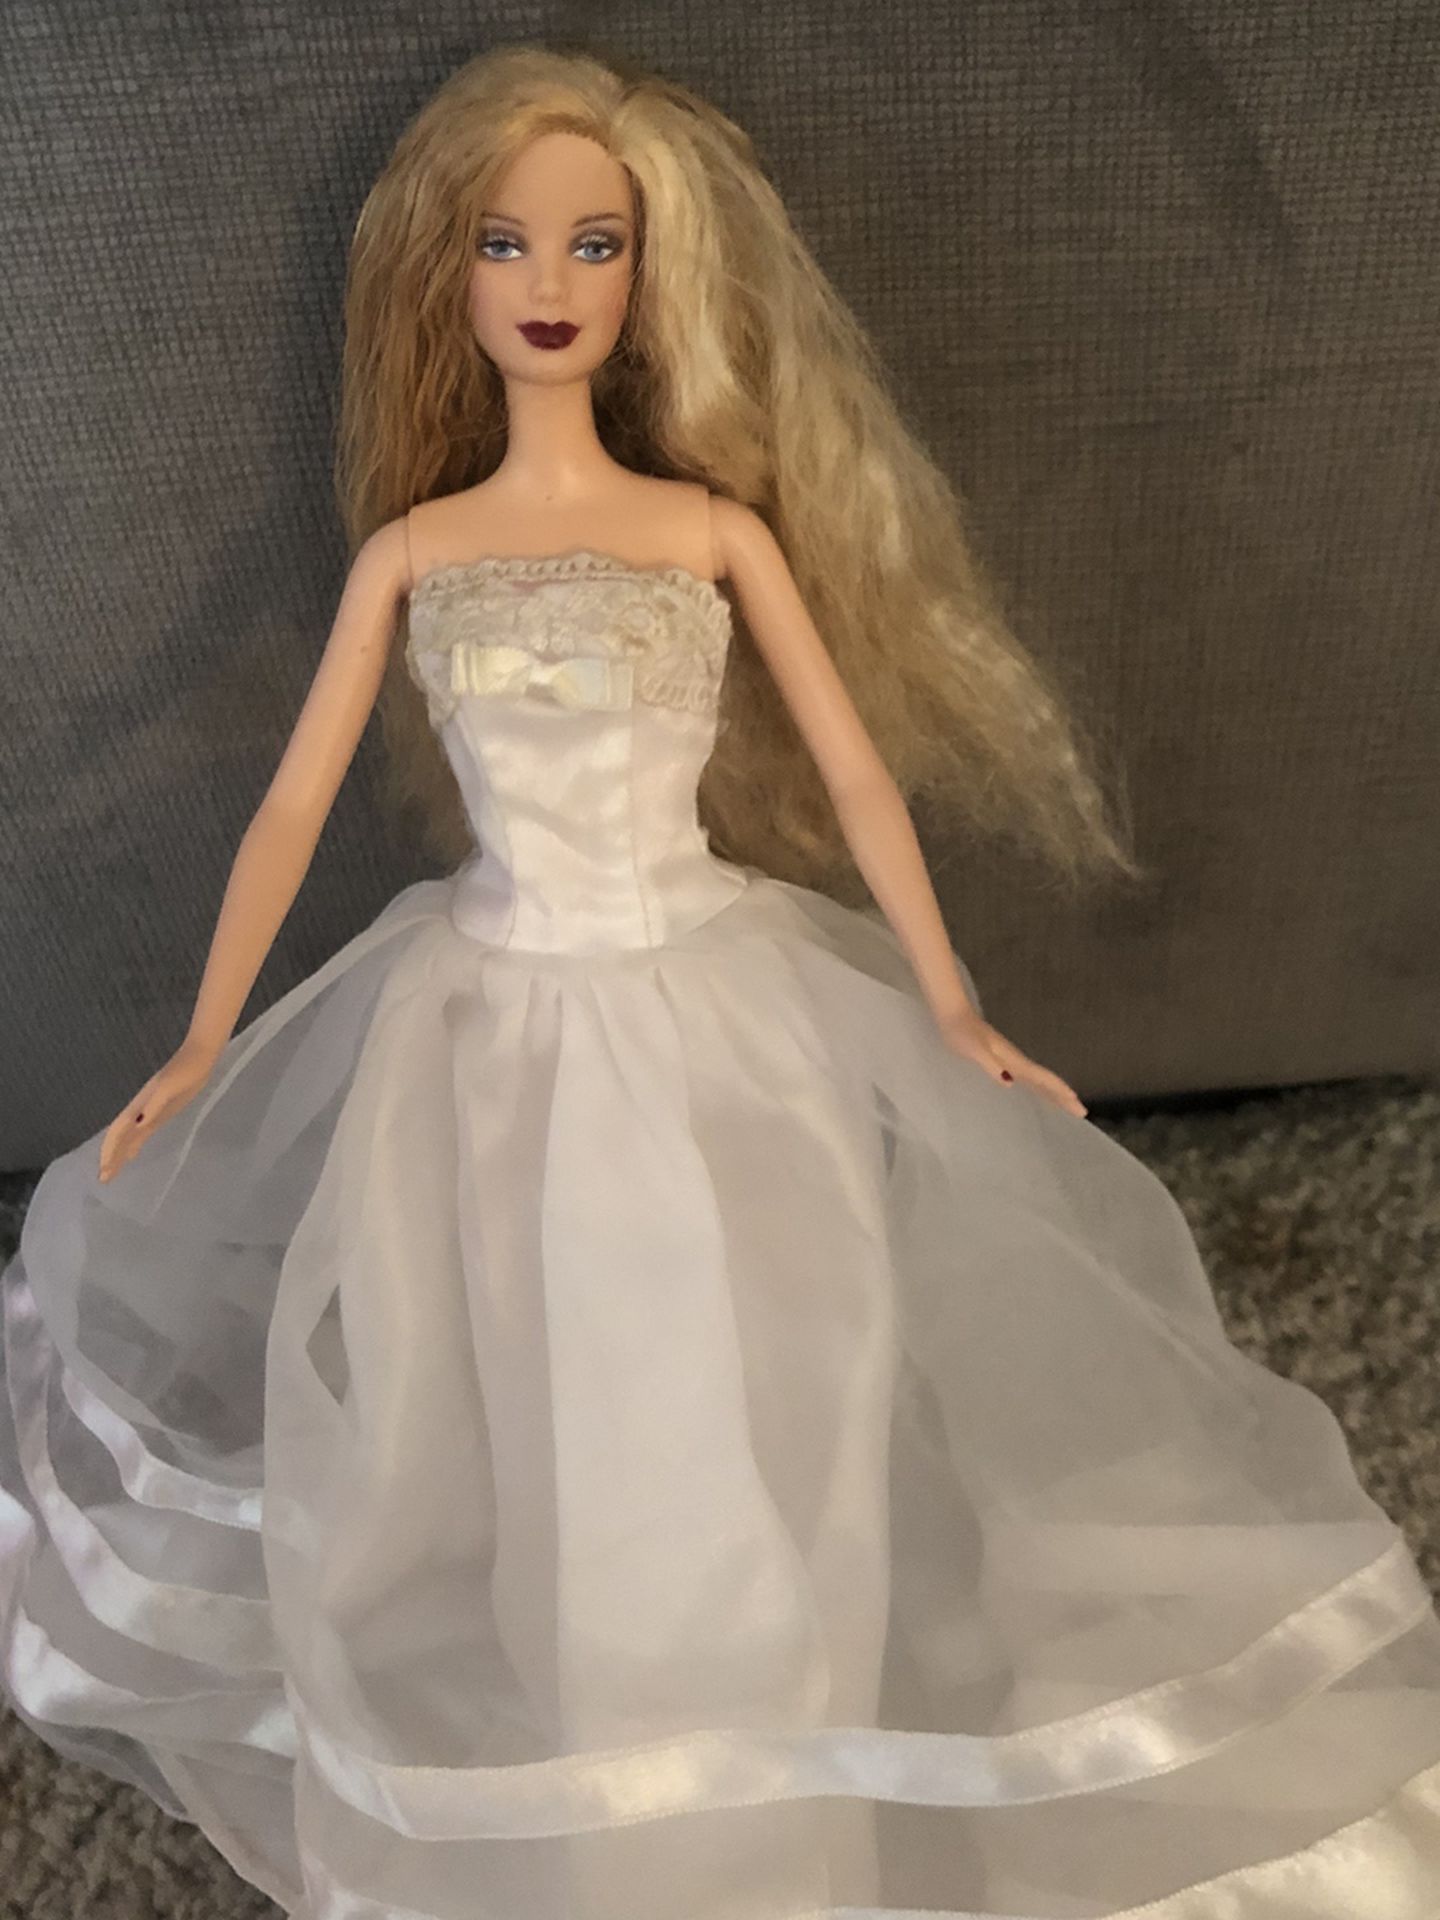 Collector’s Edition Wedding Barbie